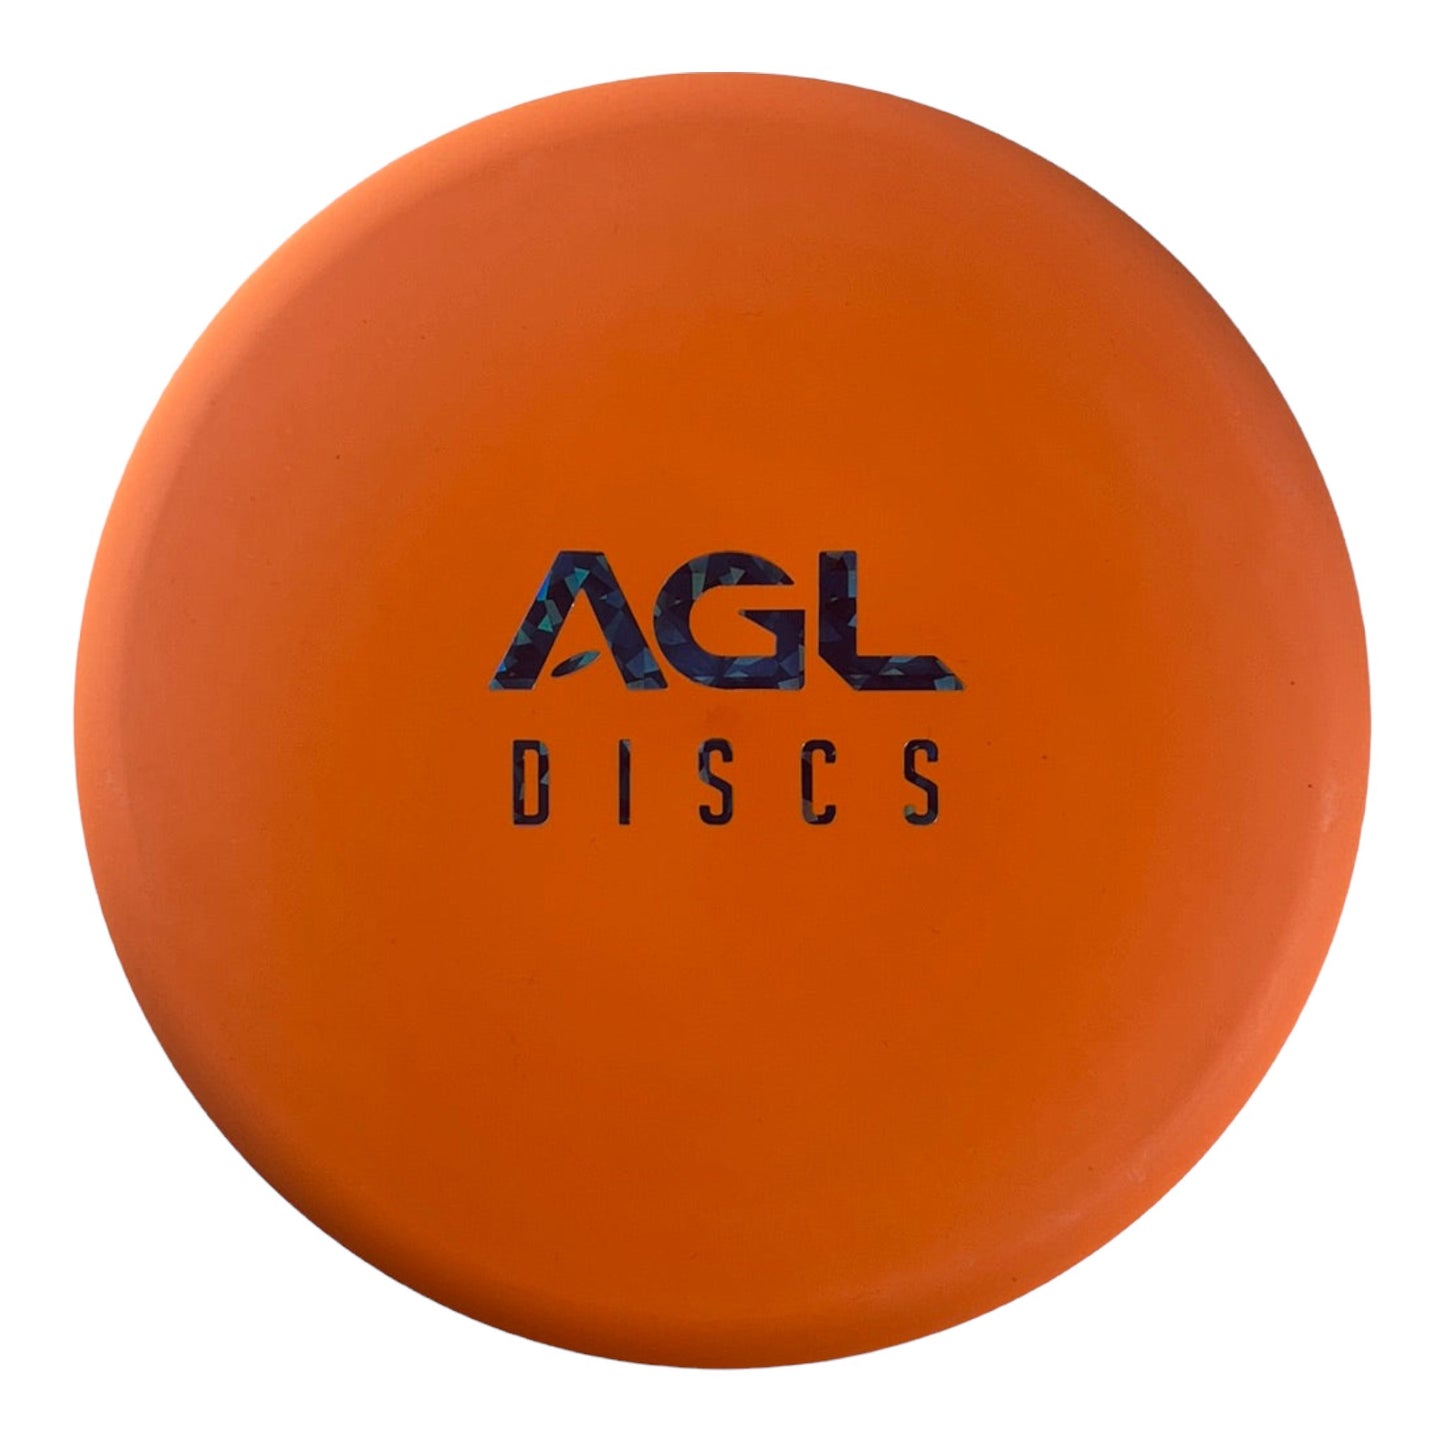 Above Ground Level Douglas Fir | Woodland | Orange/Blue 170g Disc Golf